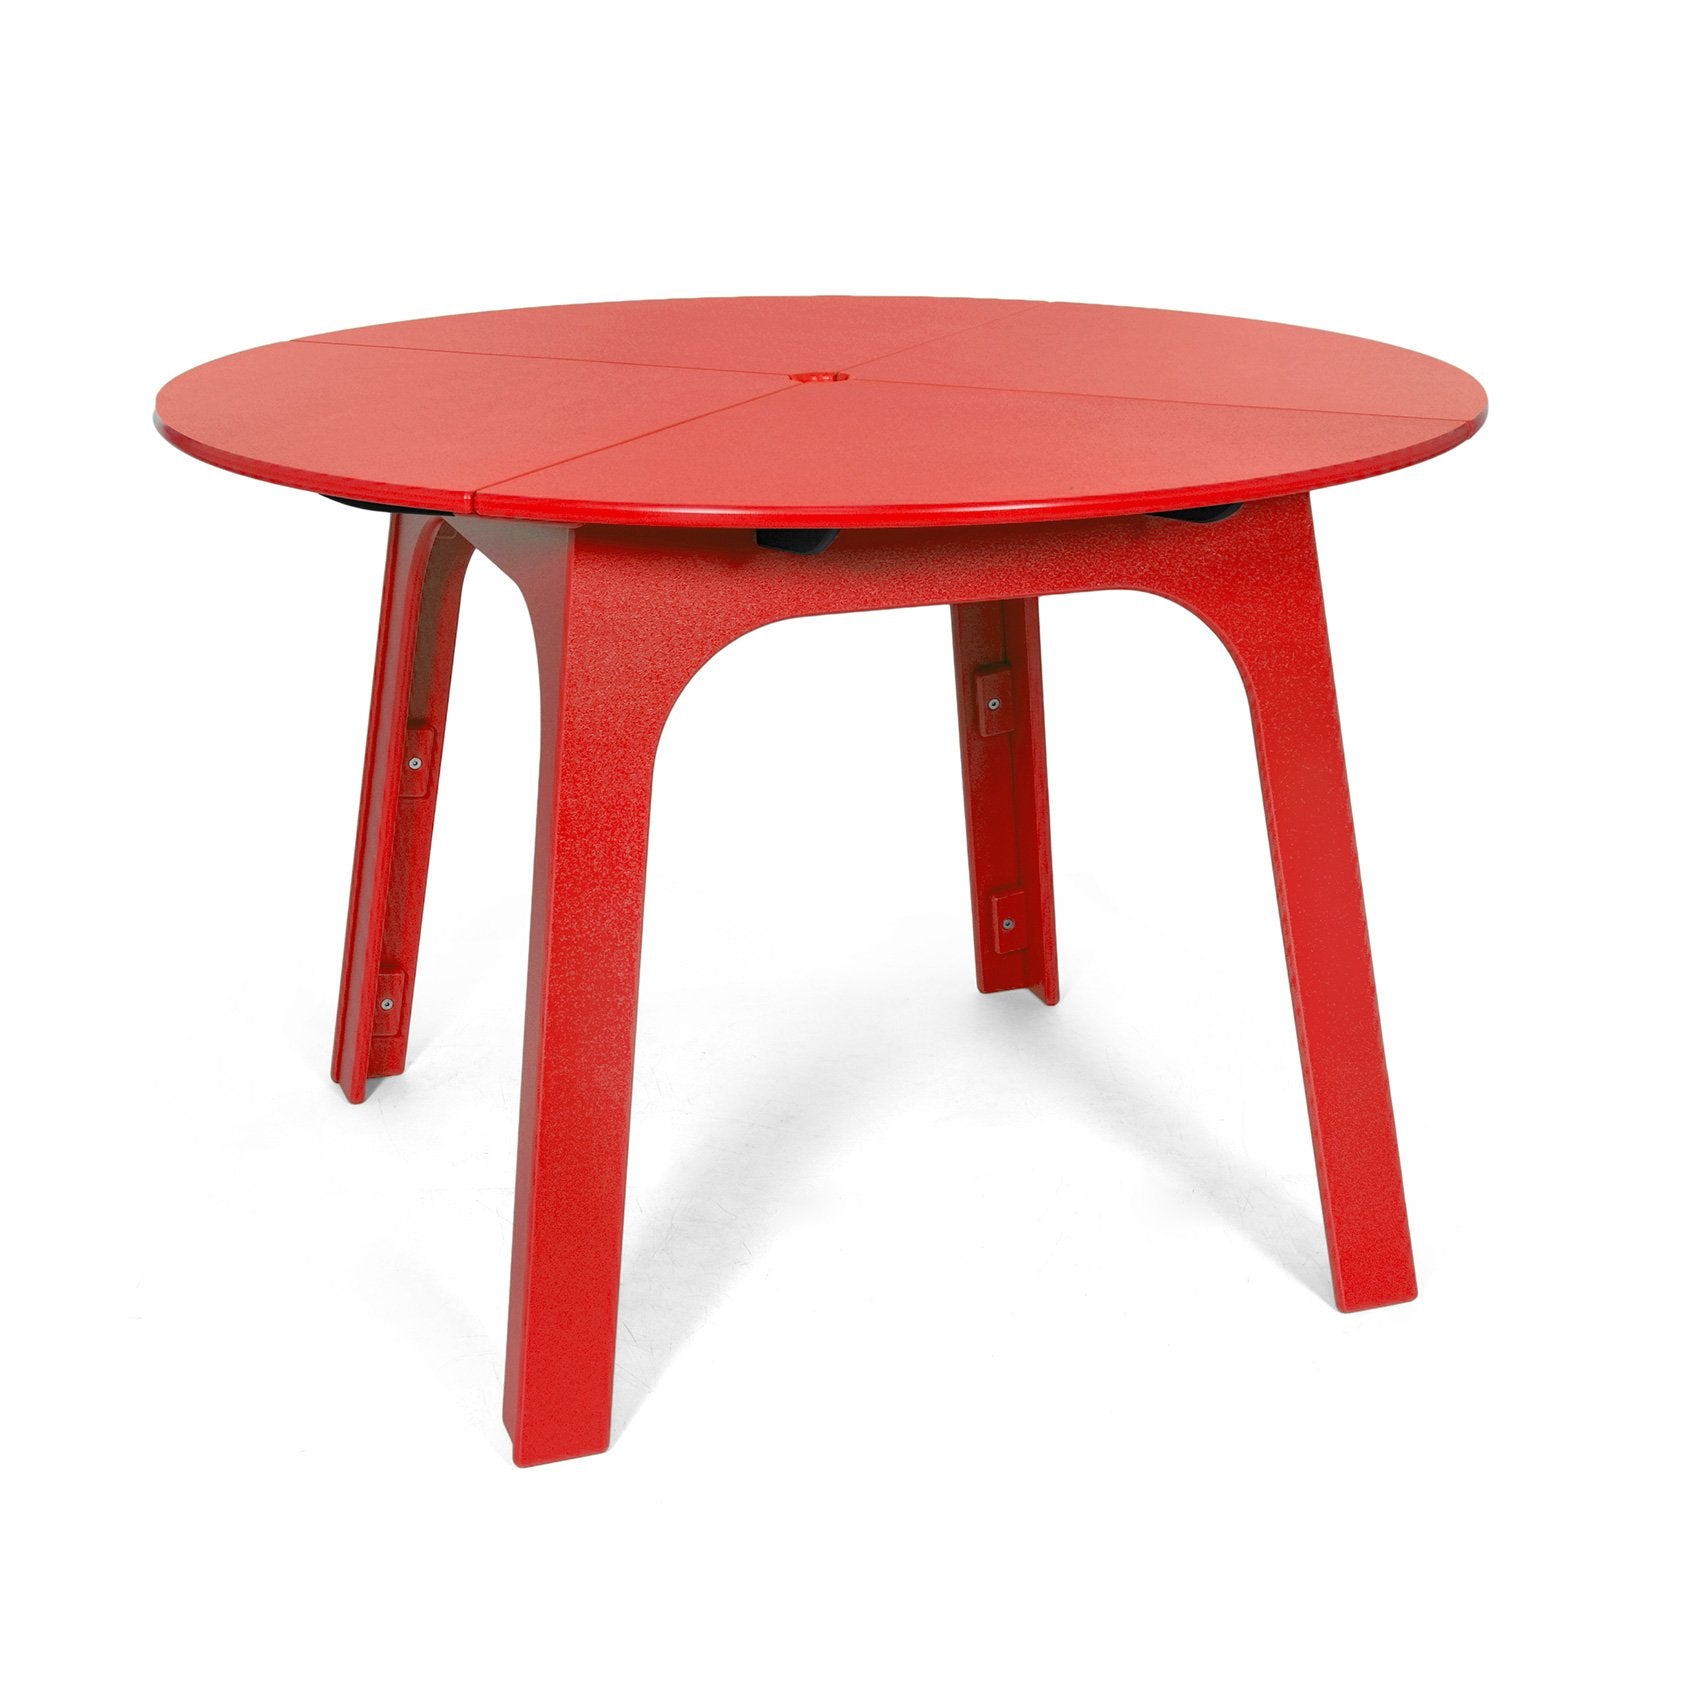 Alfresco Round Table (44 inch)